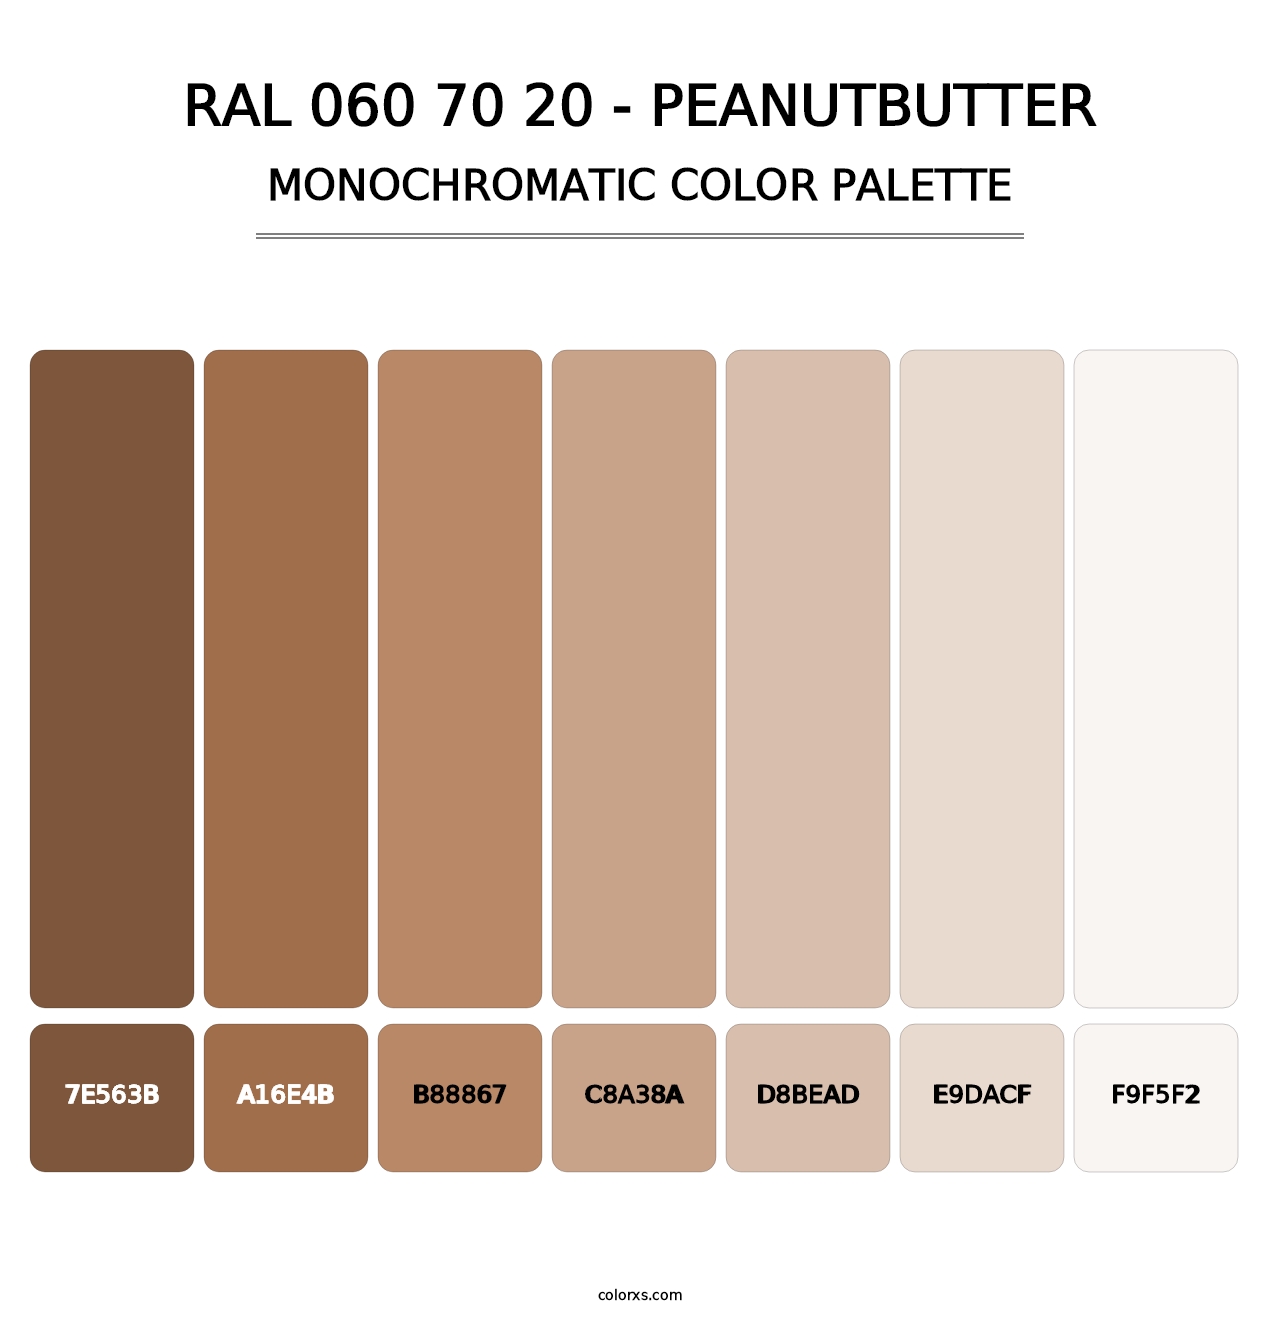 RAL 060 70 20 - Peanutbutter - Monochromatic Color Palette